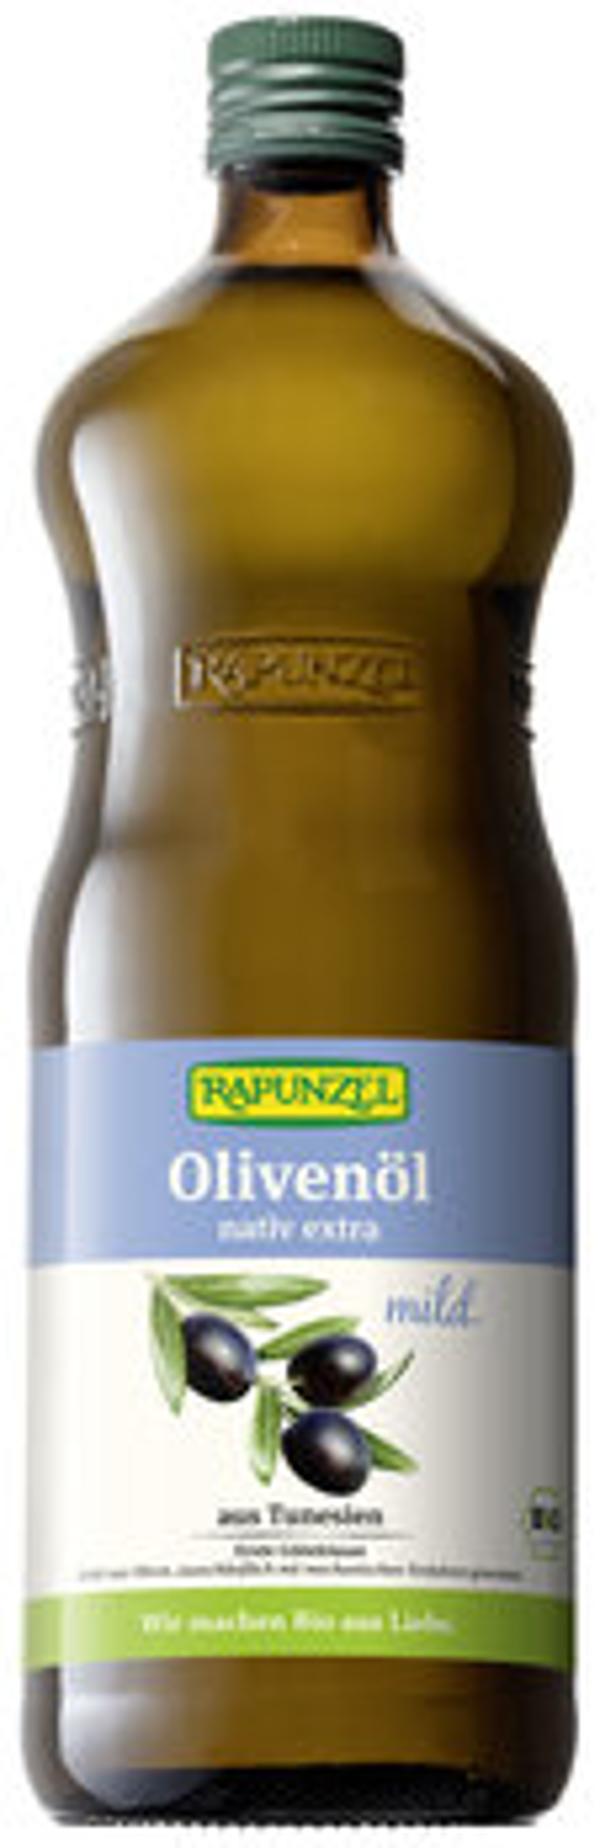 Produktfoto zu Rapunzel Olivenöl fruchtig, nativ extra 1l